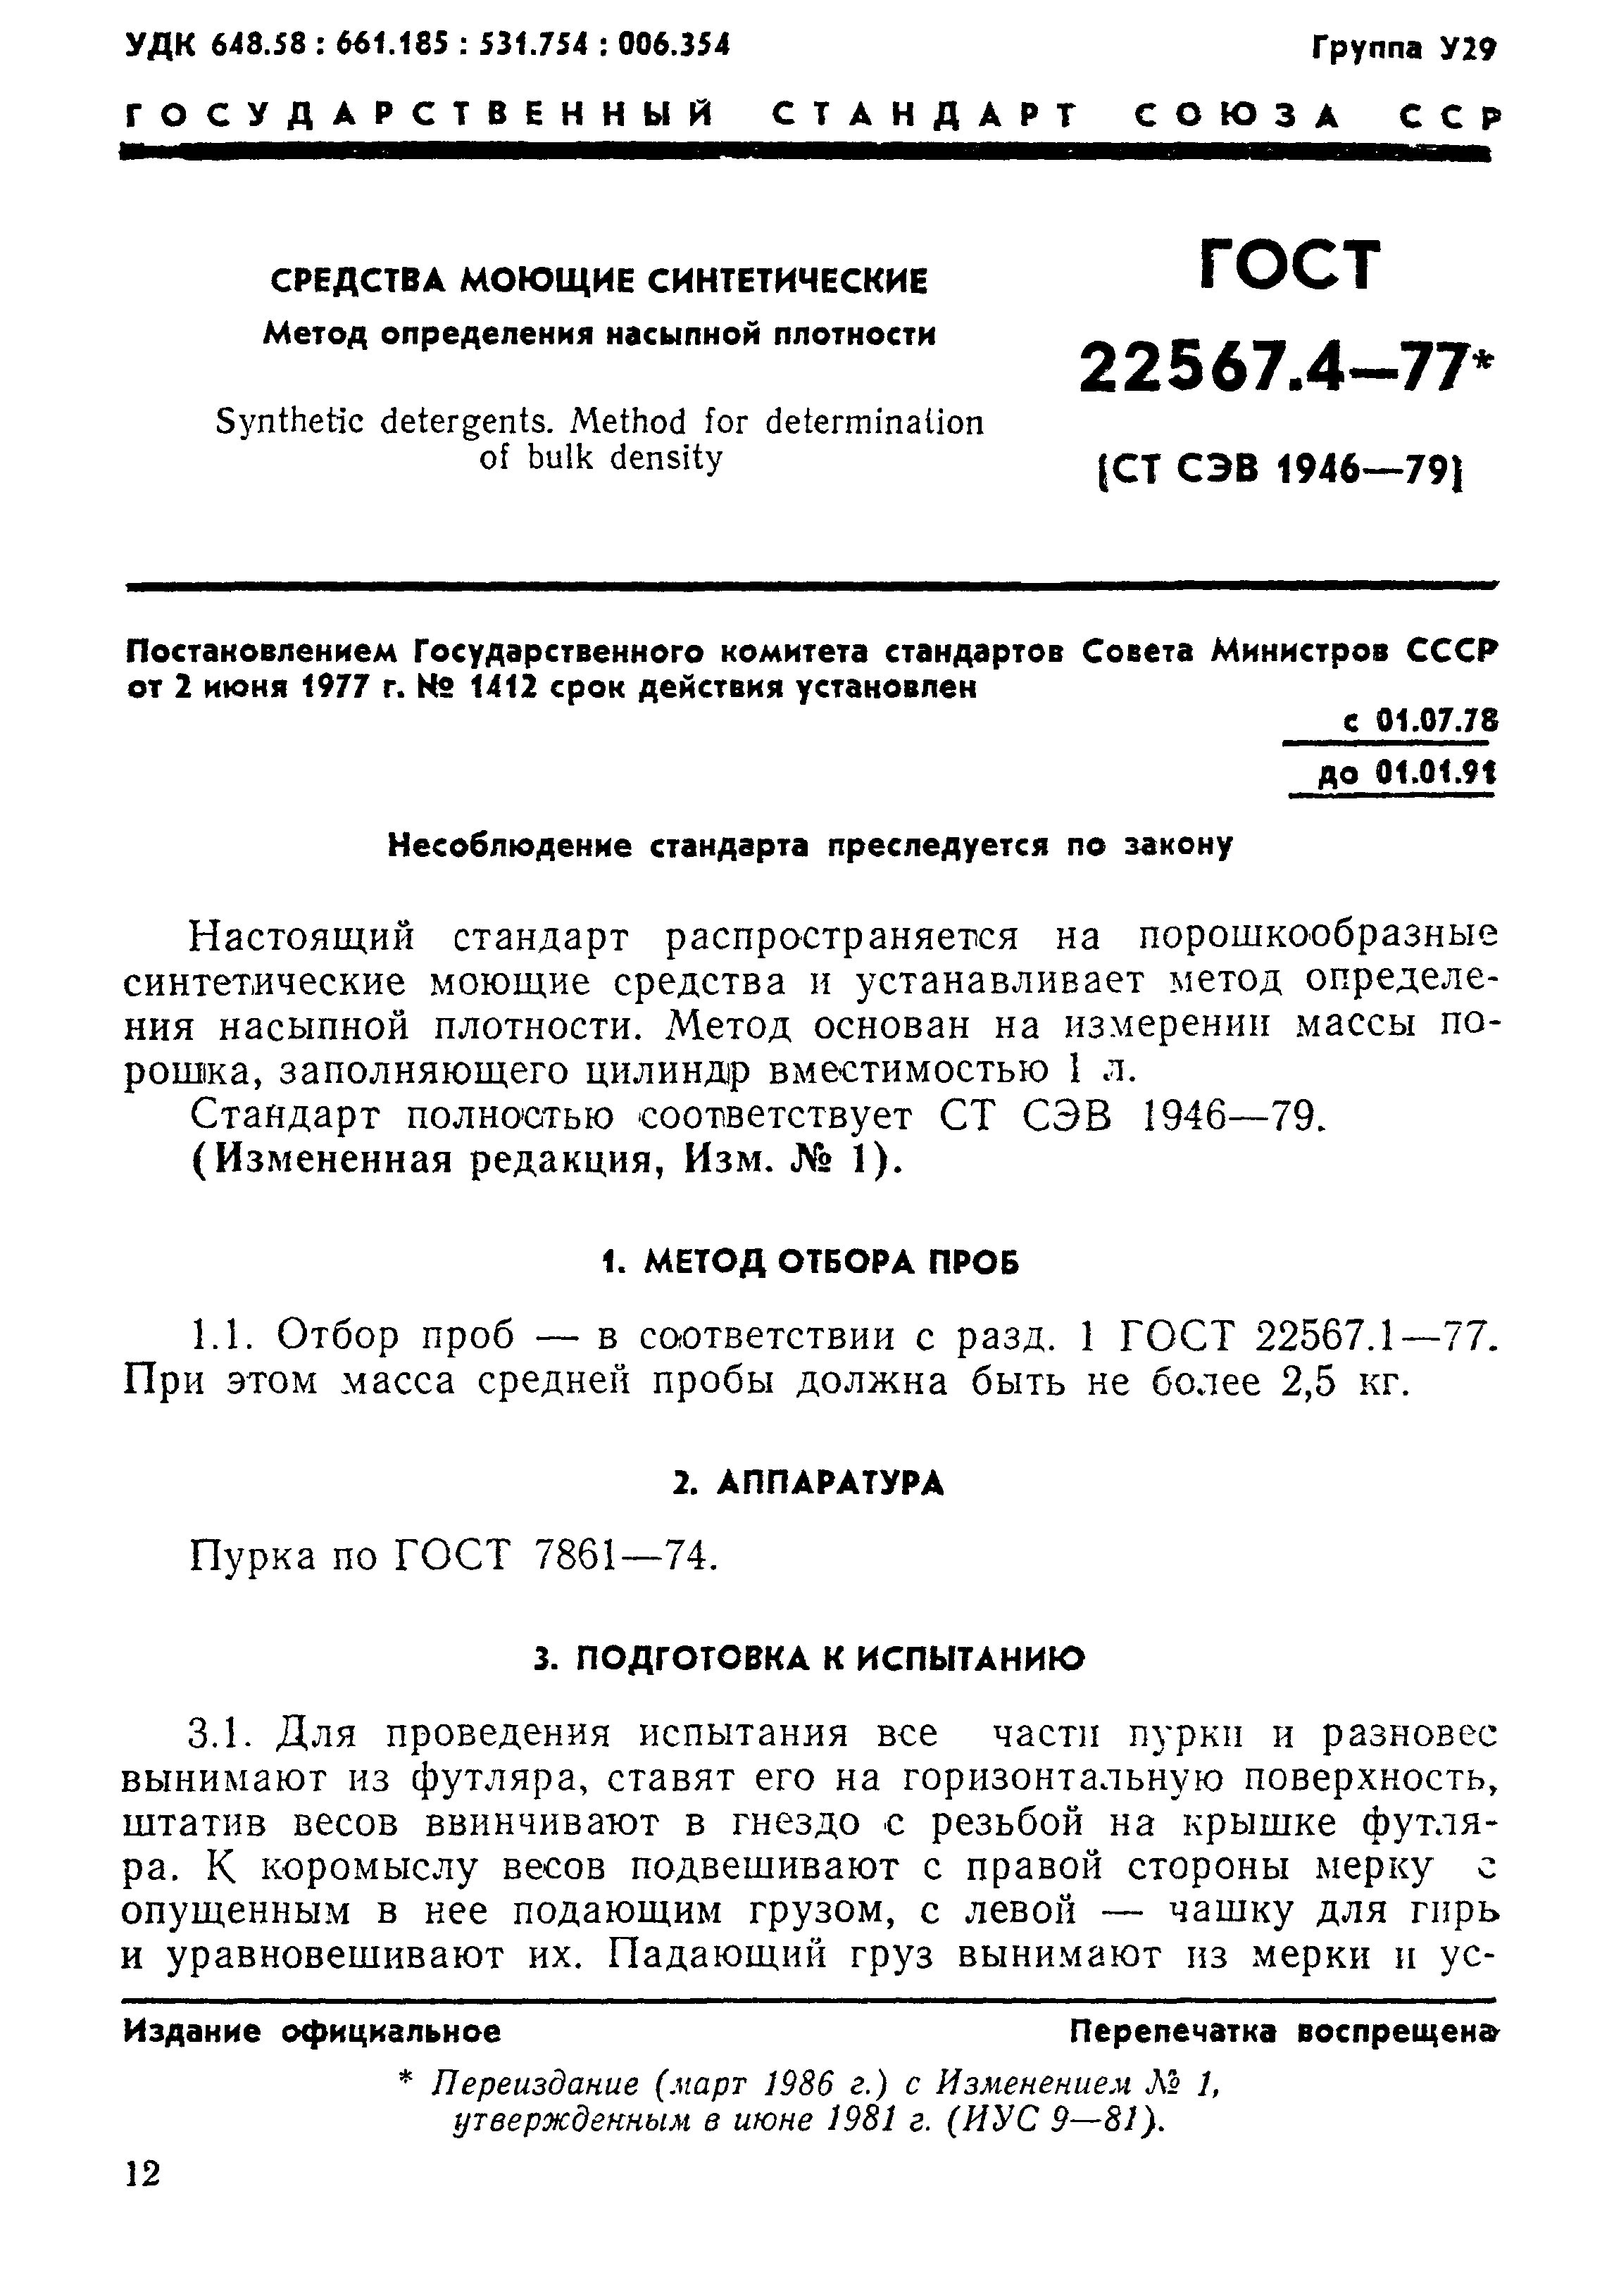 ГОСТ 22567.4-77